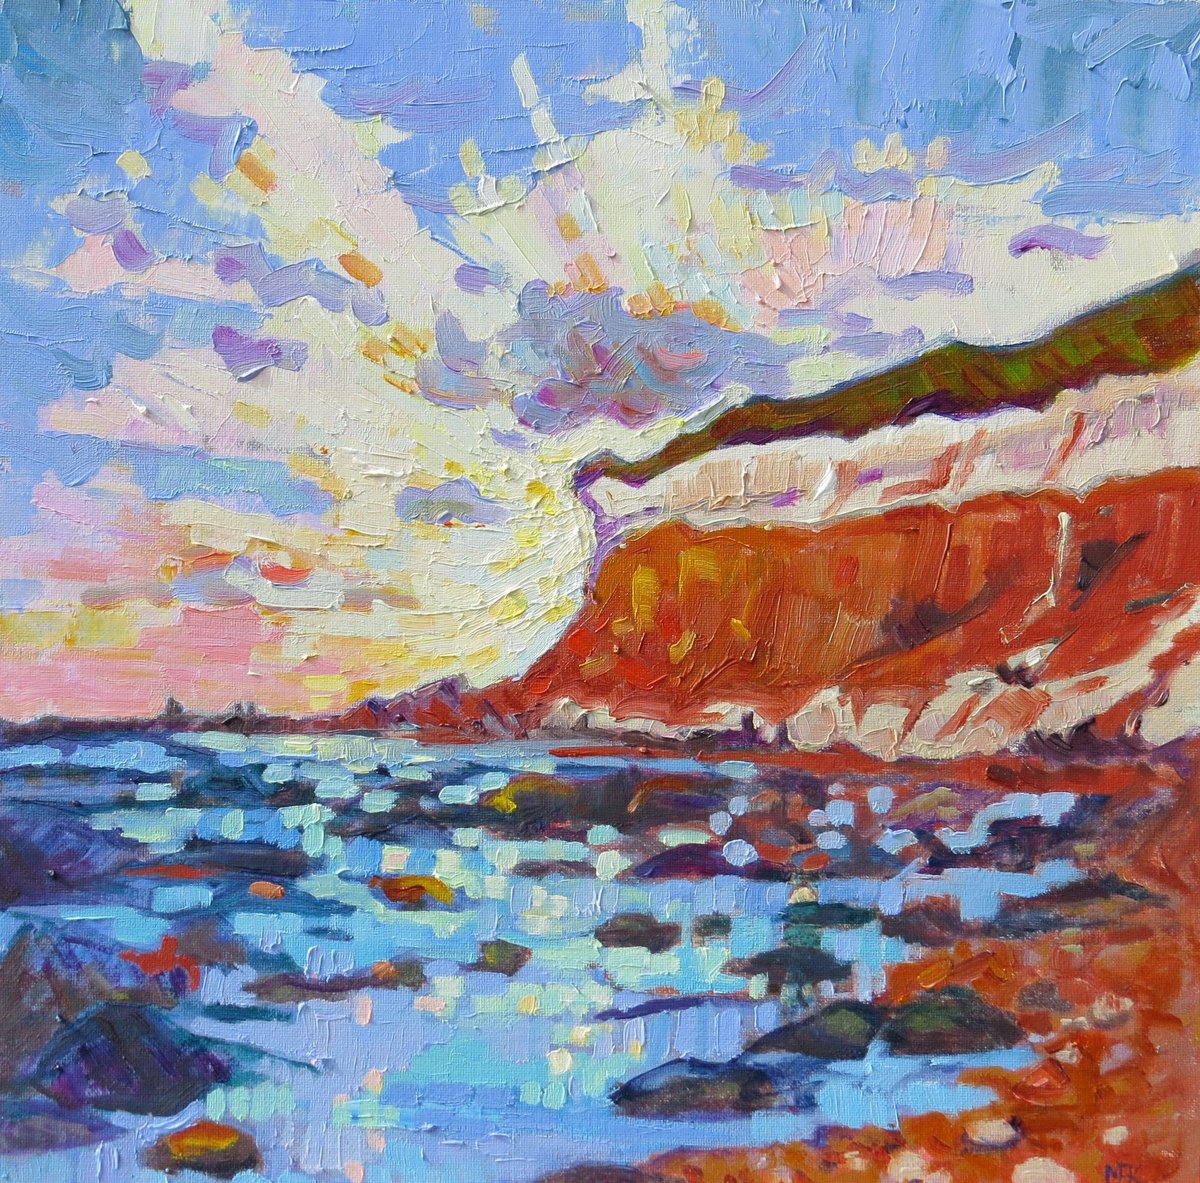 Hunstanton Cliffs and Beach by Mary Kemp